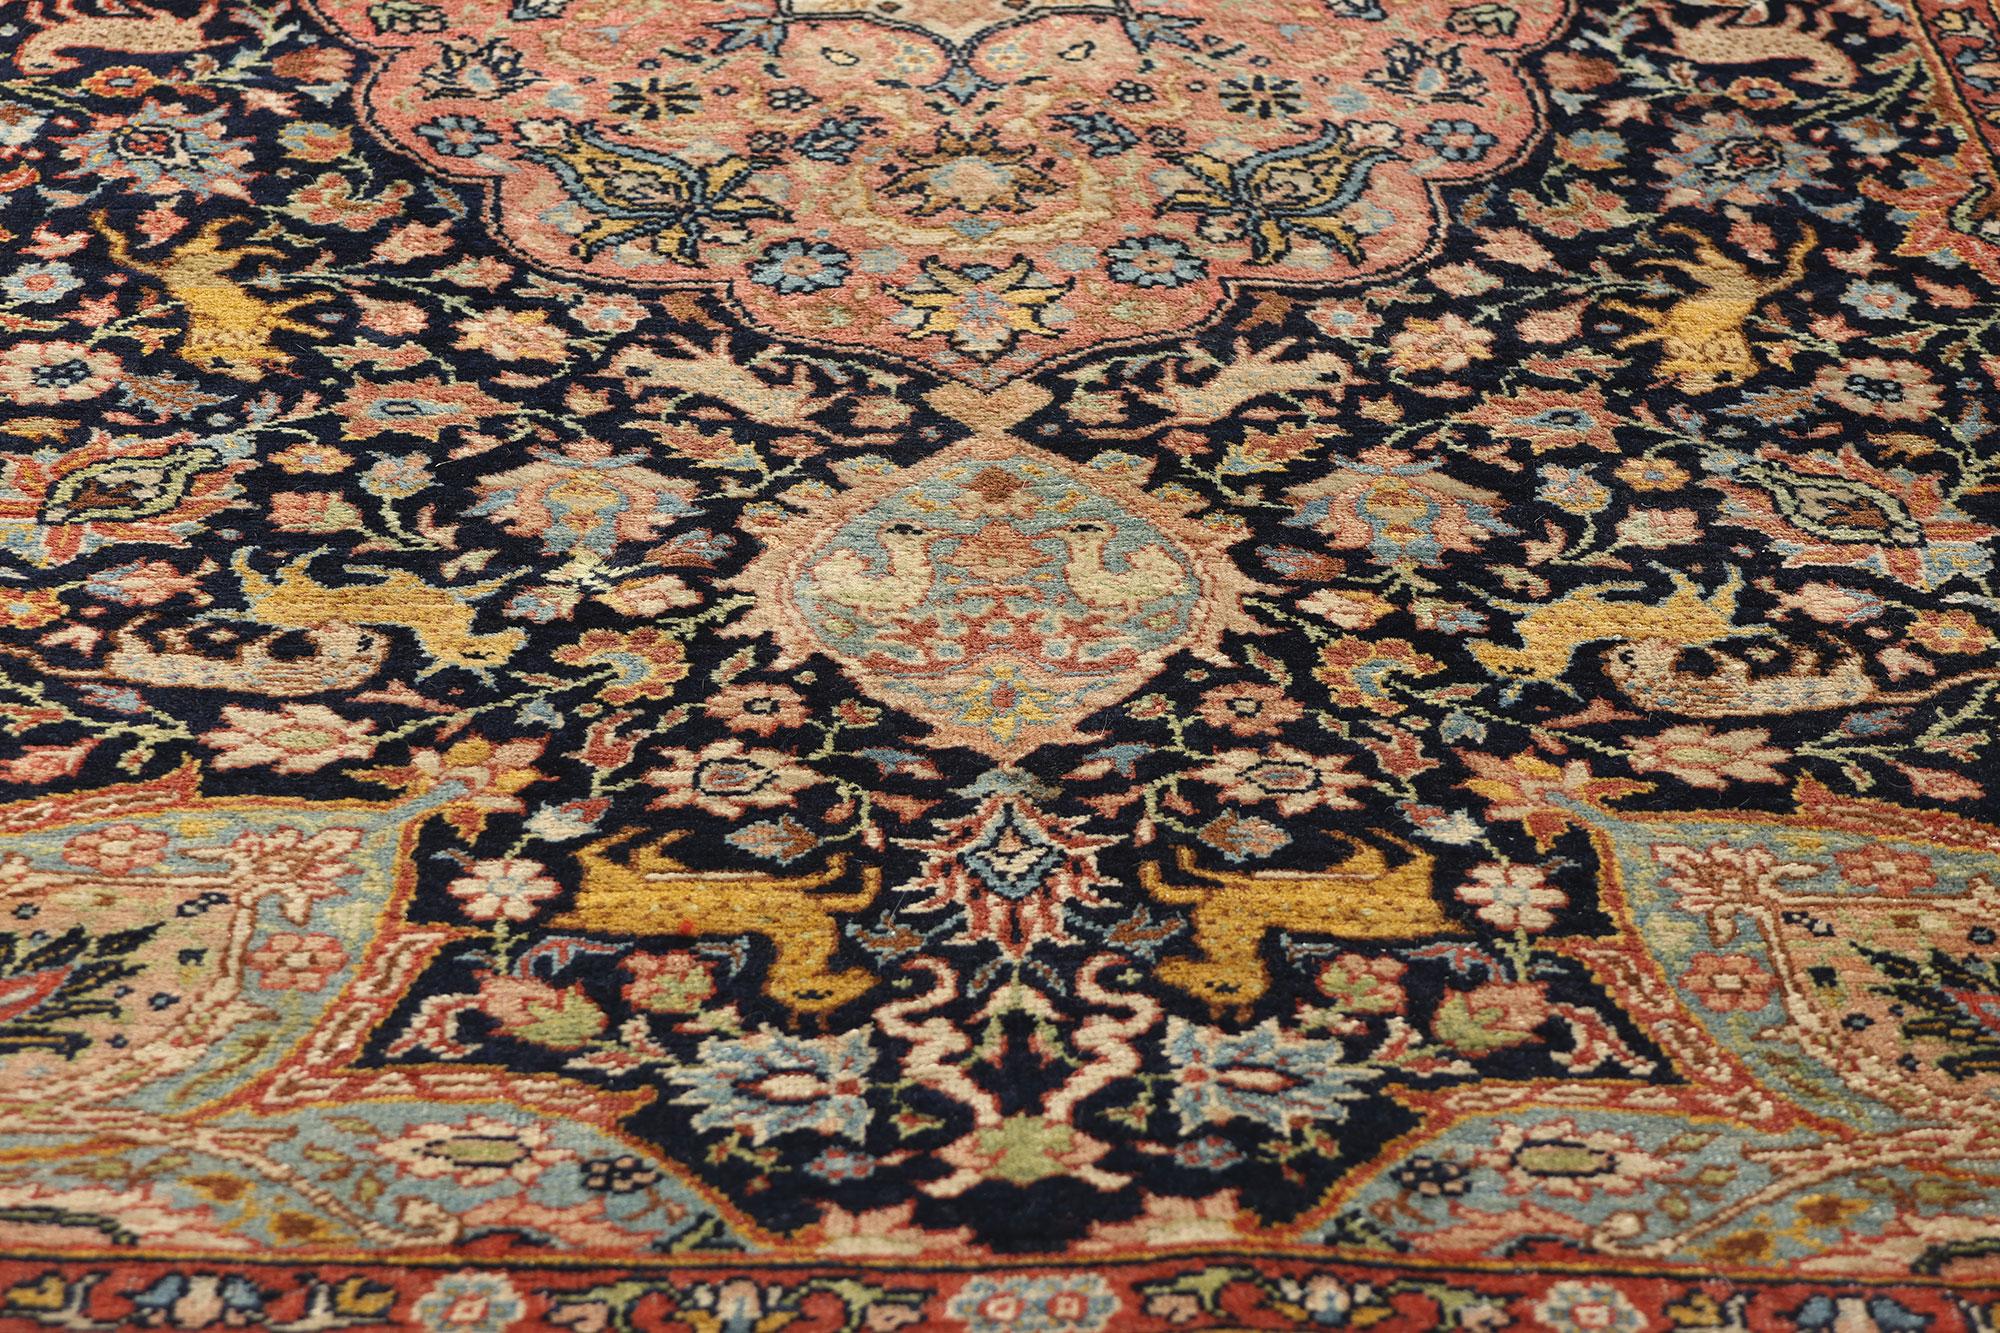 20th Century Safavid Medallion and Animal Persian Tabriz Hunting Carpet For Sale